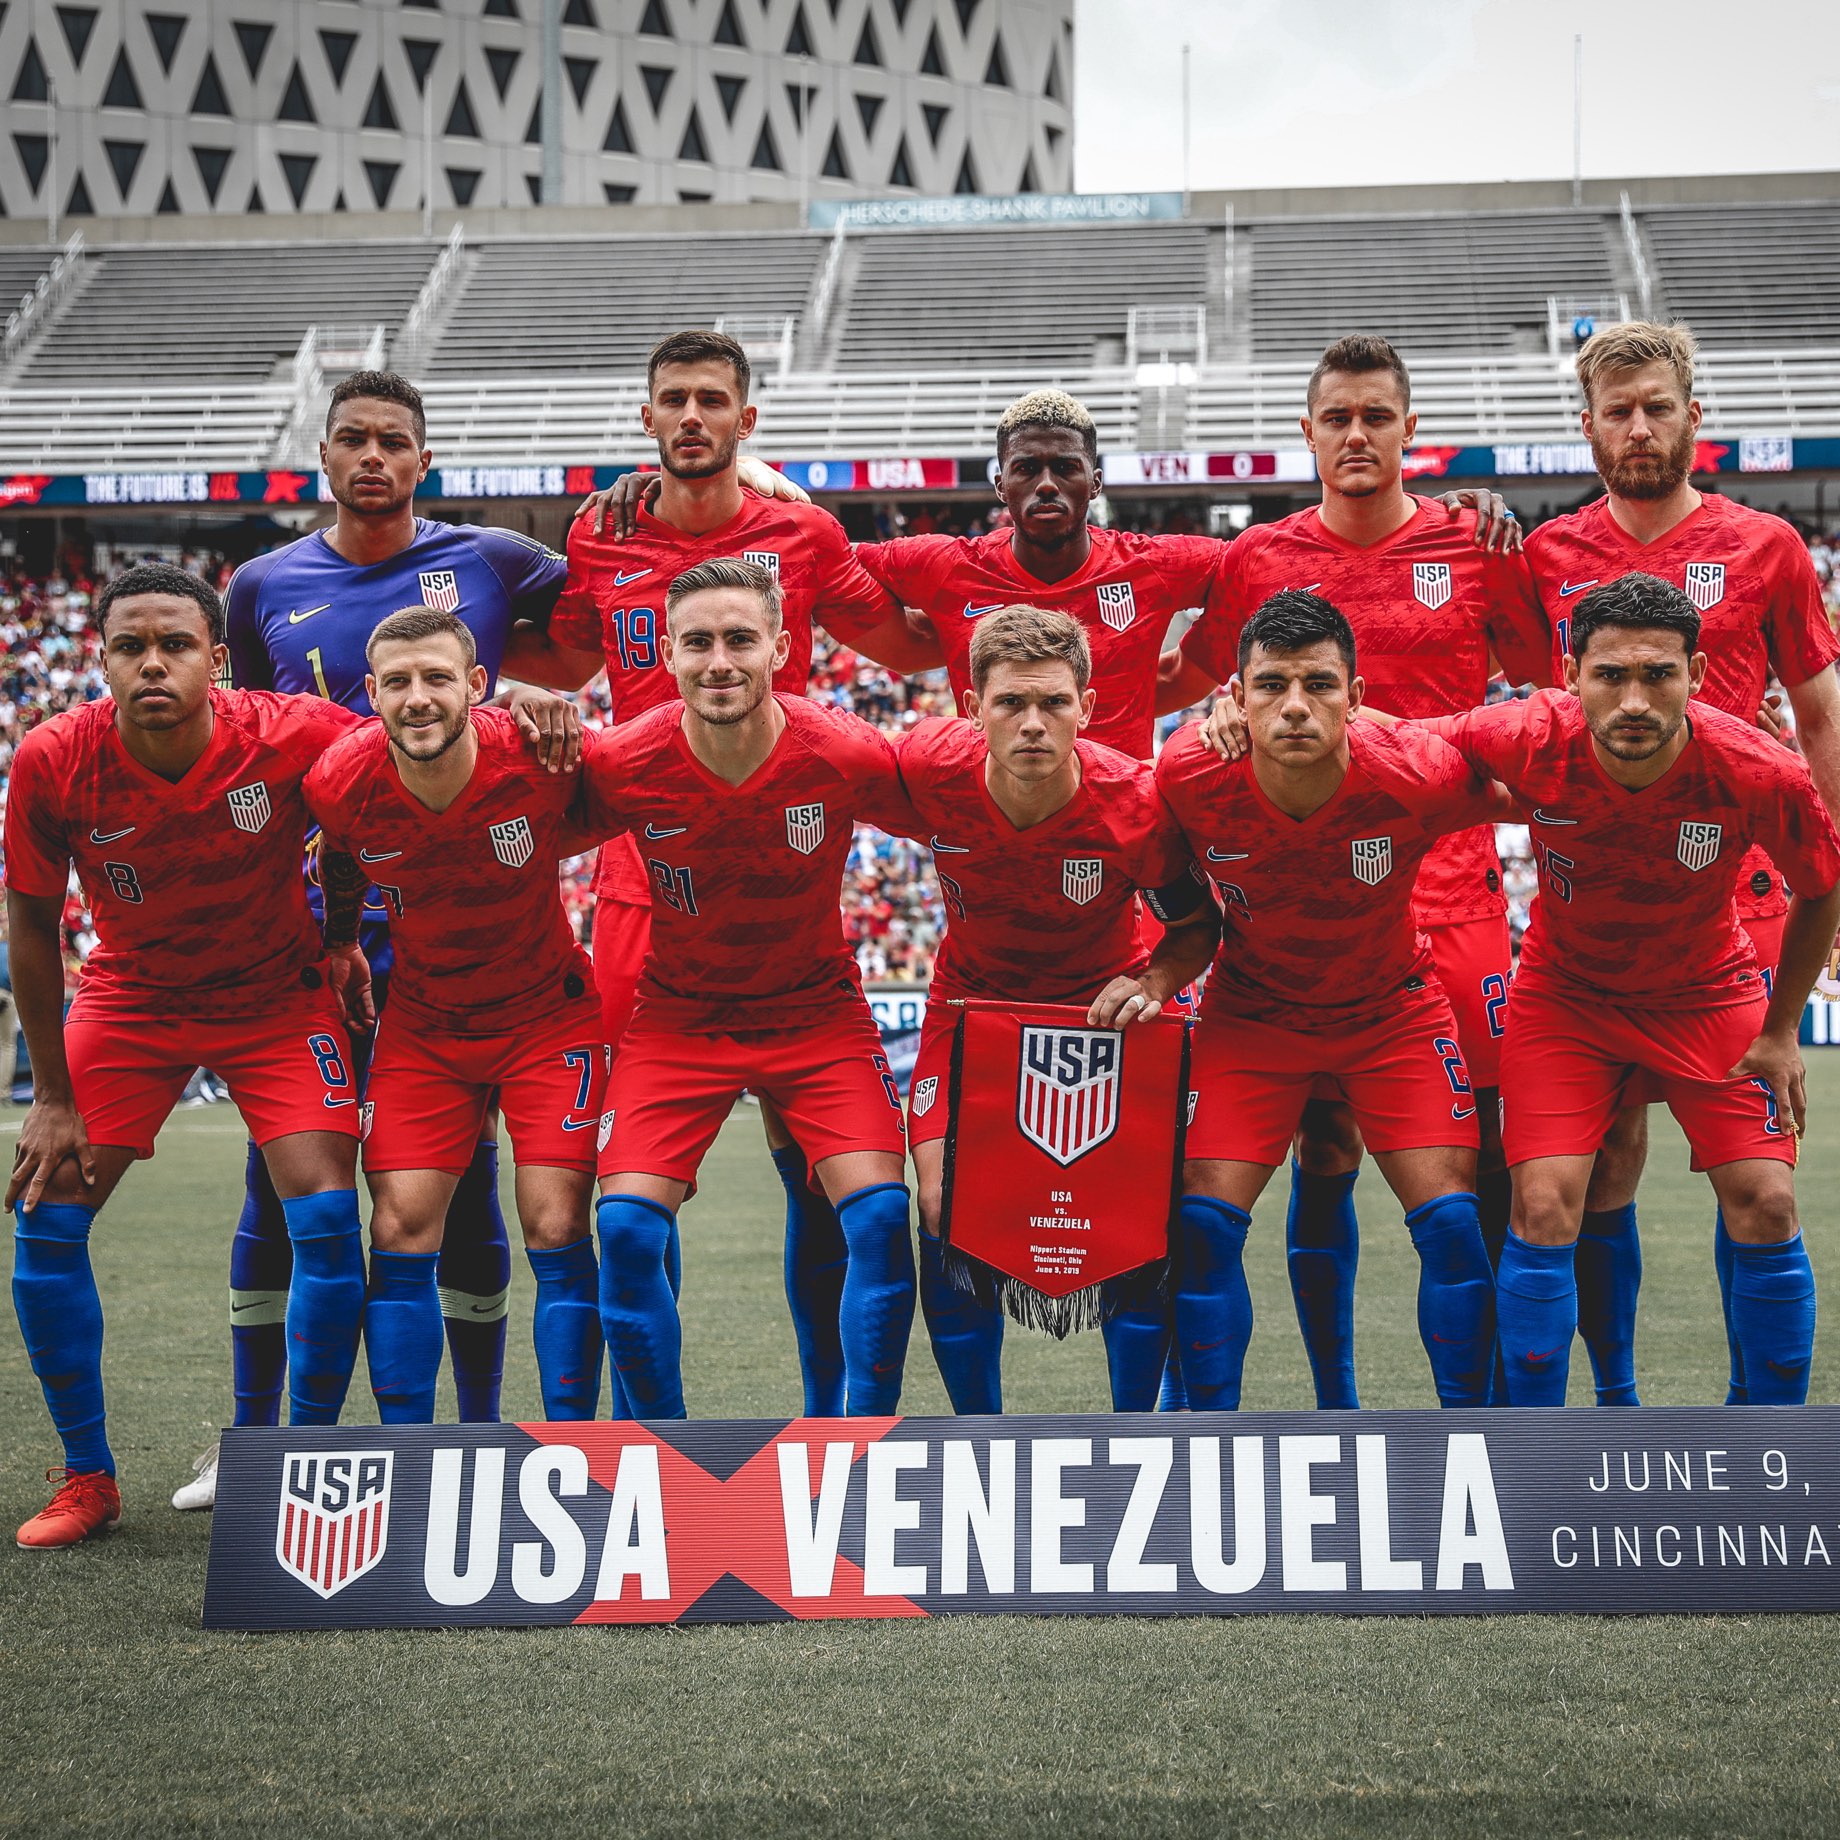 U.S. Men’s National Team Falls 3-0 To Venezuela In Cincinnati